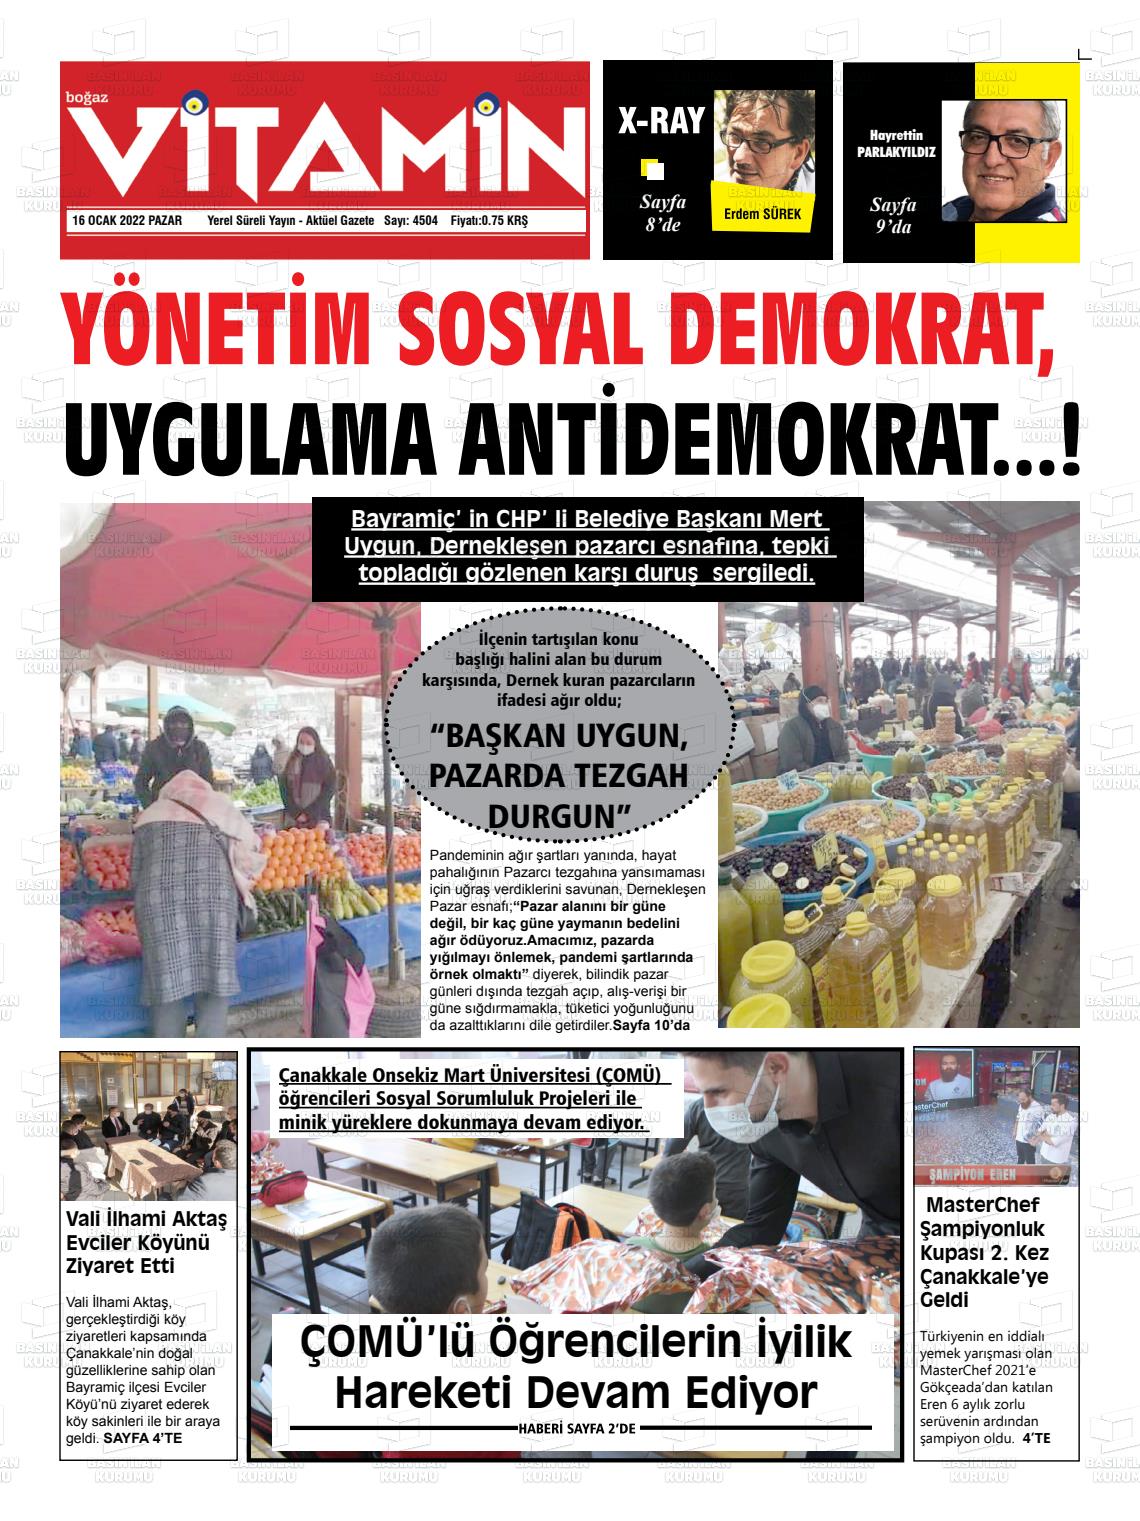 16 Ocak 2022 Gazete Vitamin Gazete Manşeti